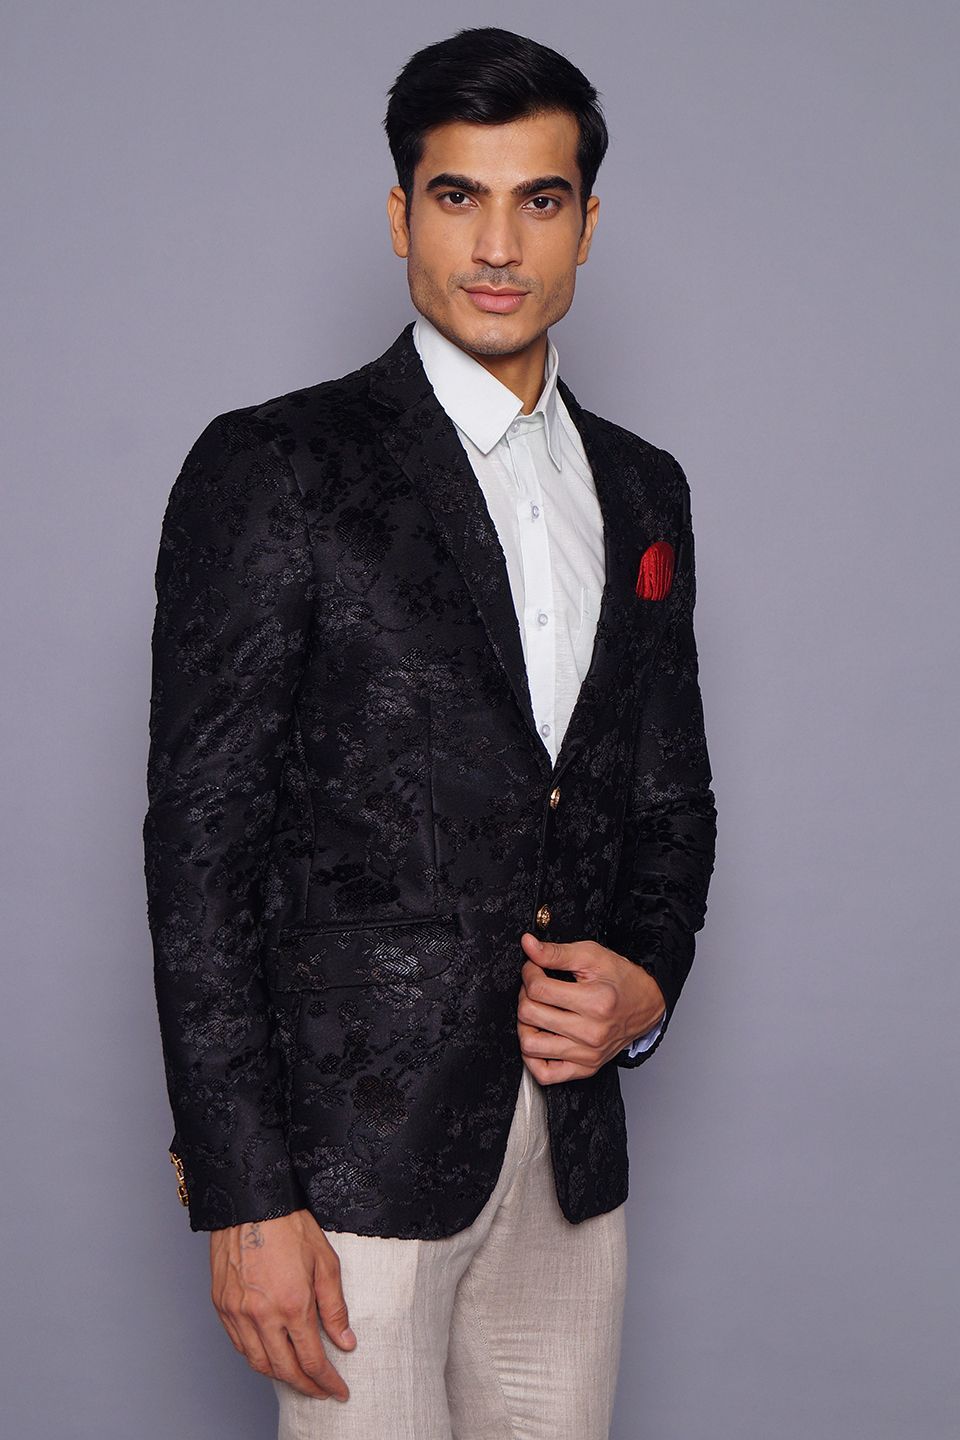 Wintage Men's Embroidered Velvet  Coat Blazer Jacket: Black